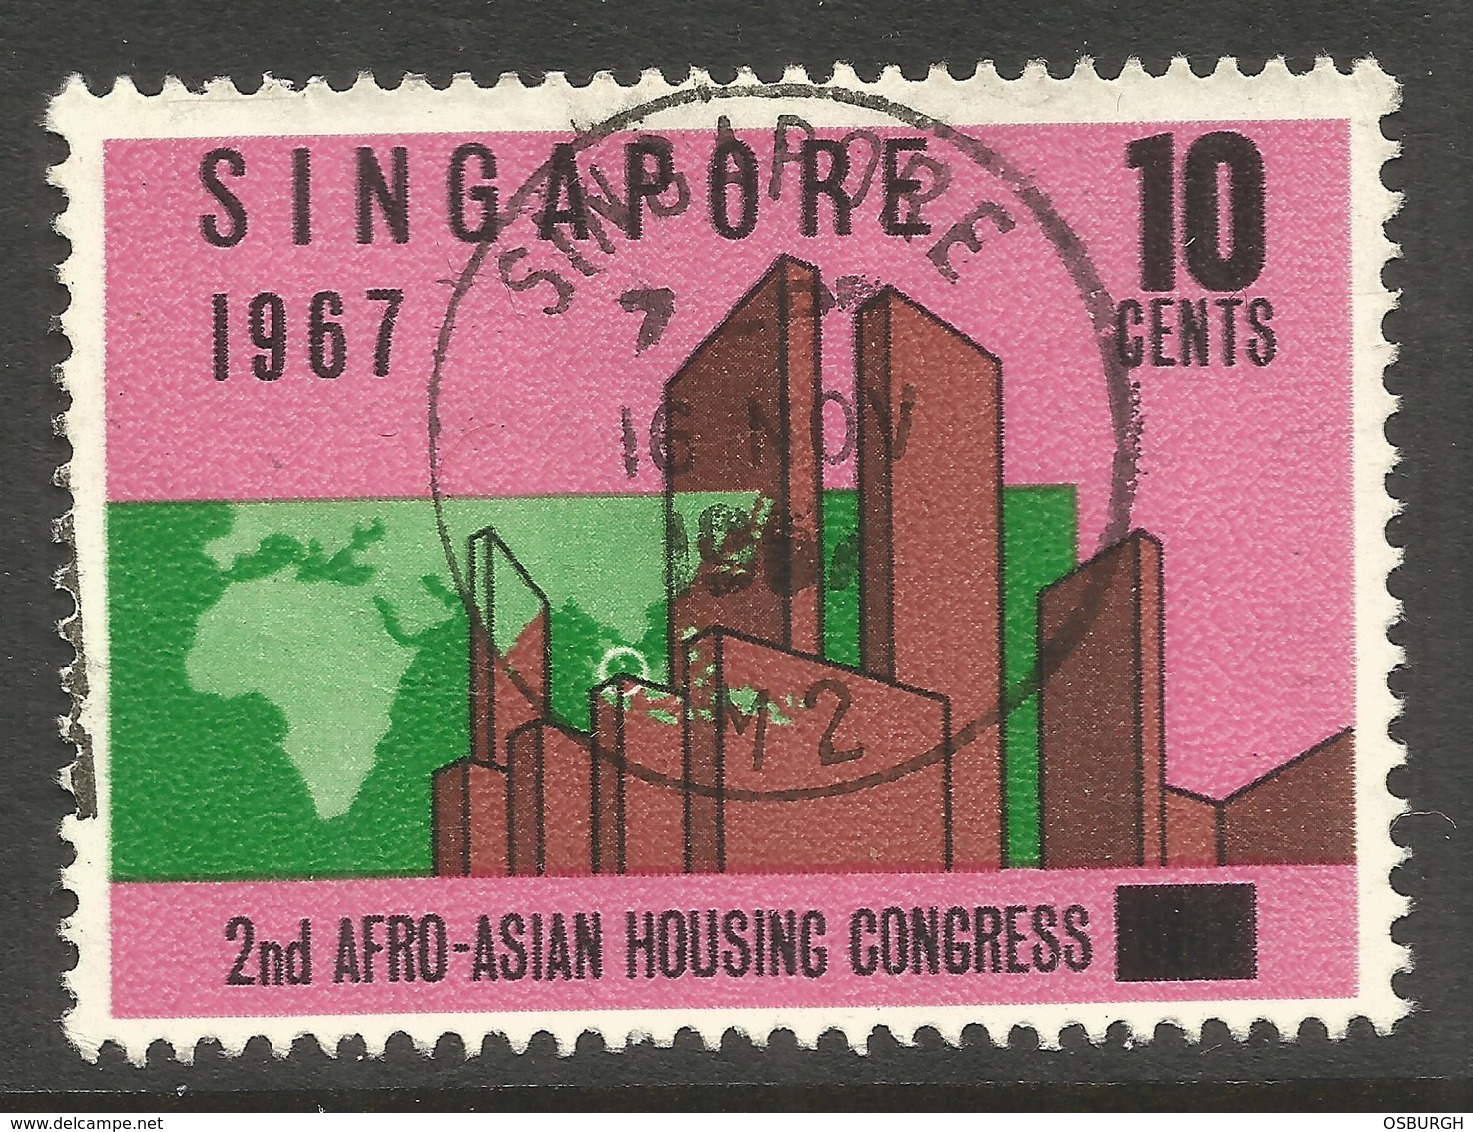 SINGAPORE. 1967. HOUSING. 10c USED - Singapur (1959-...)